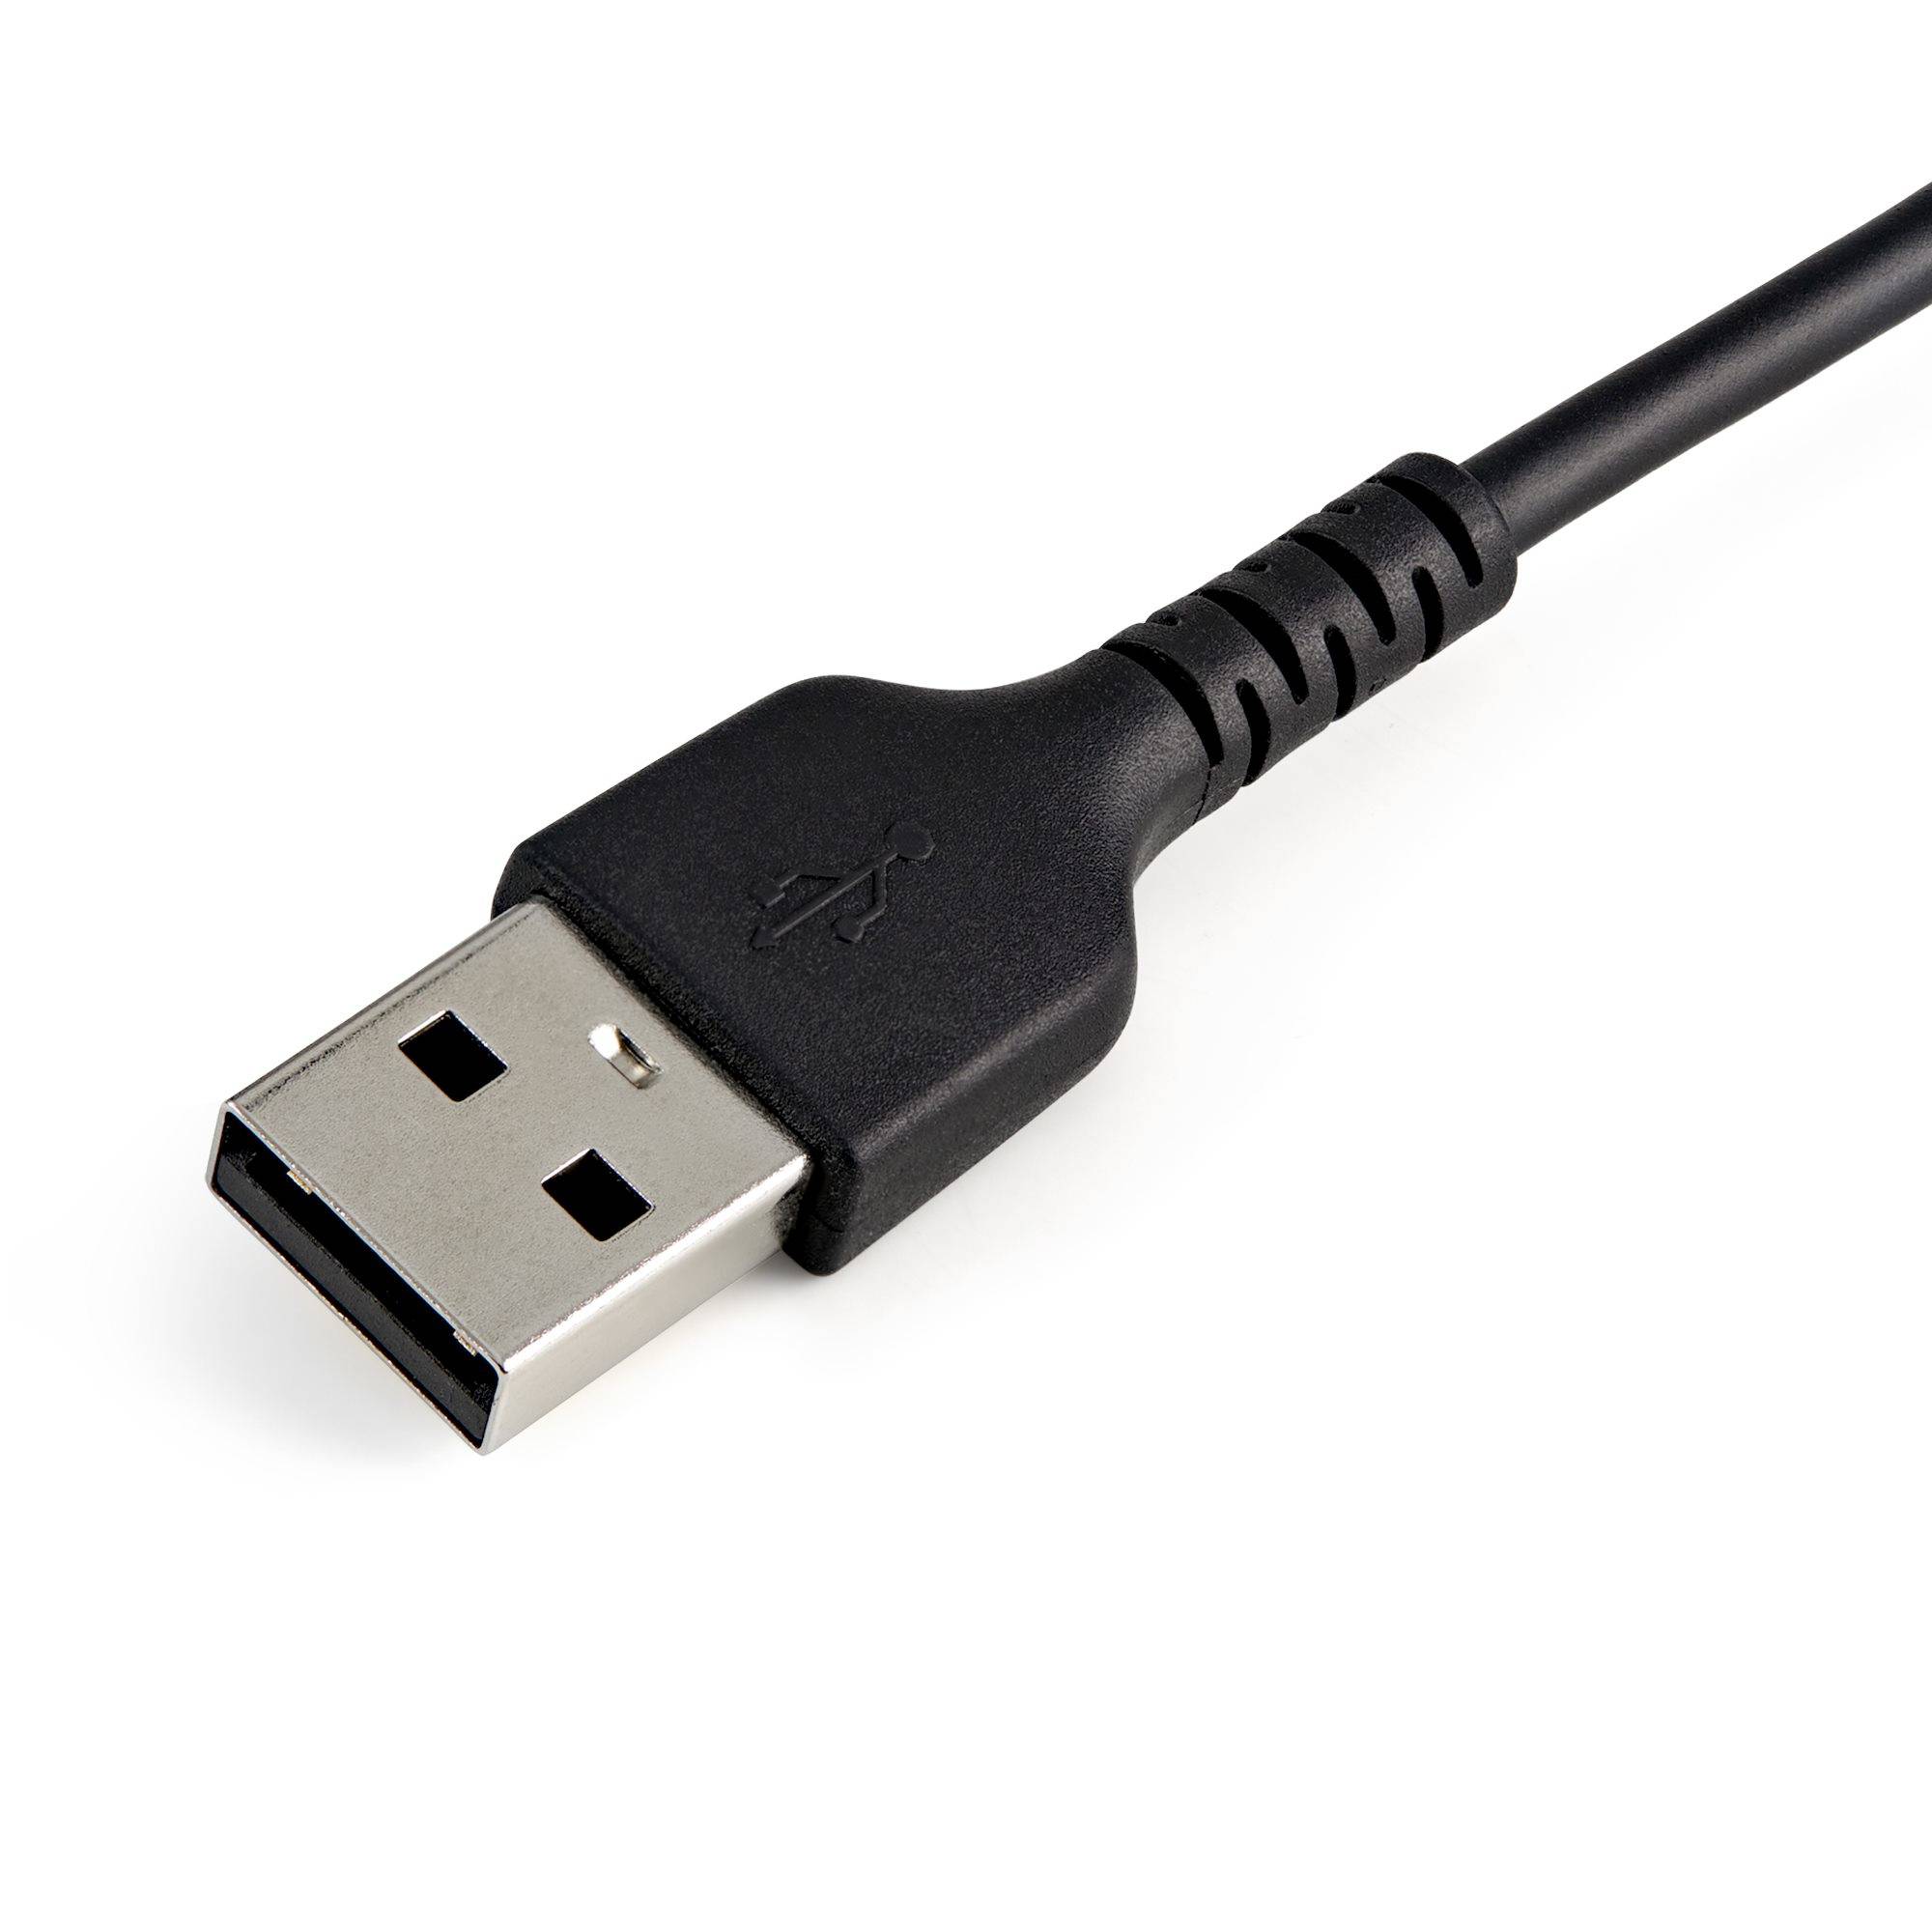 Rca Informatique - image du produit : 15CM USB TO LIGHTNING CABLE APPLE MFI CERTIFIED - BLACK